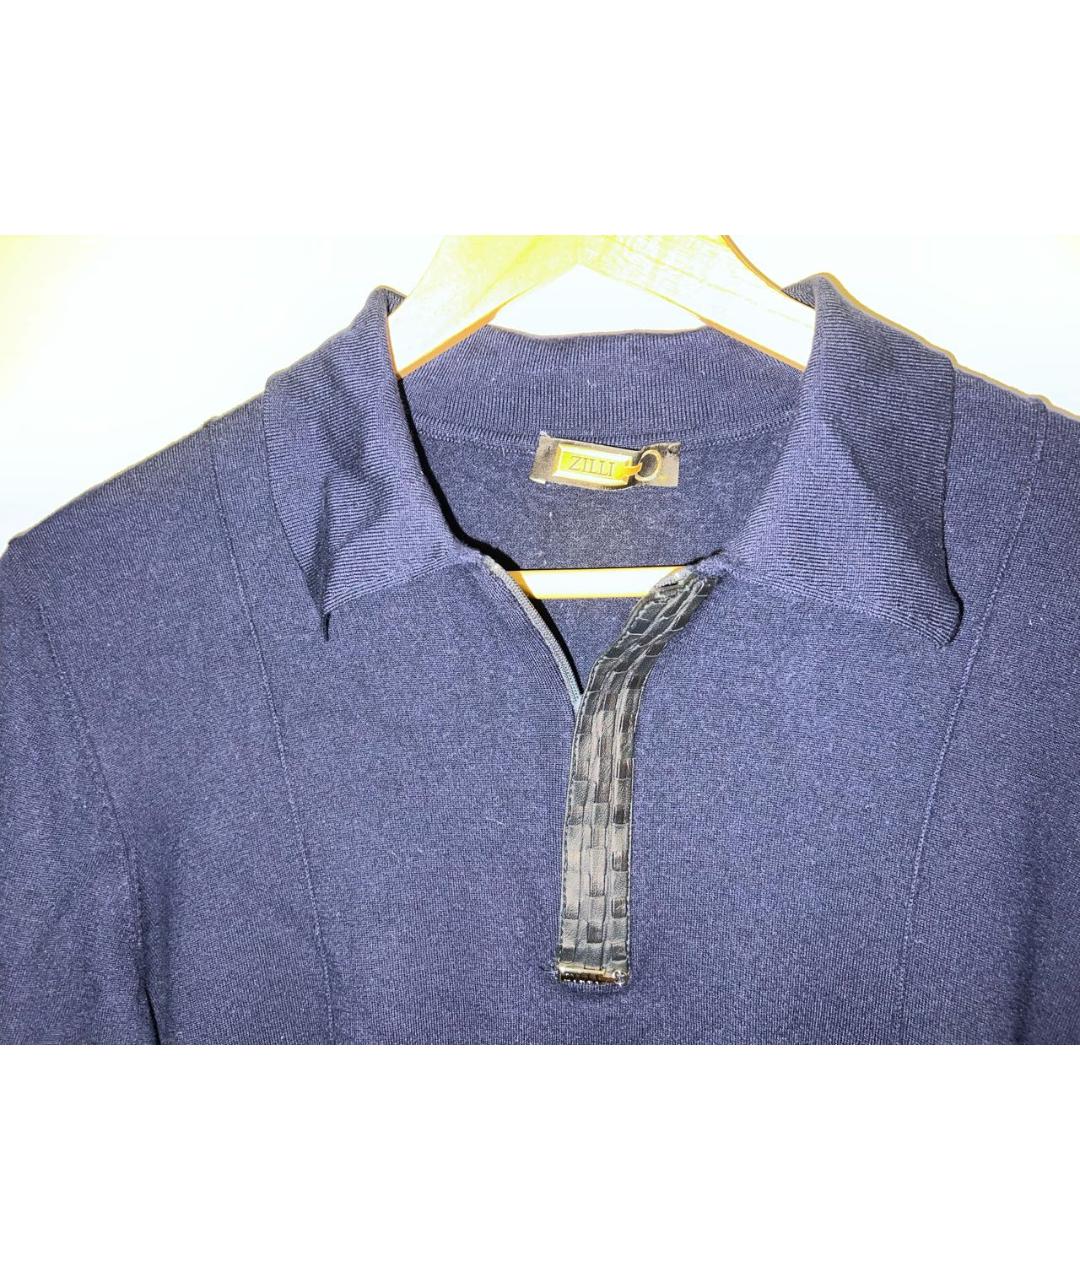 ZILLI Темно-синий шерстяной джемпер / свитер, фото 3